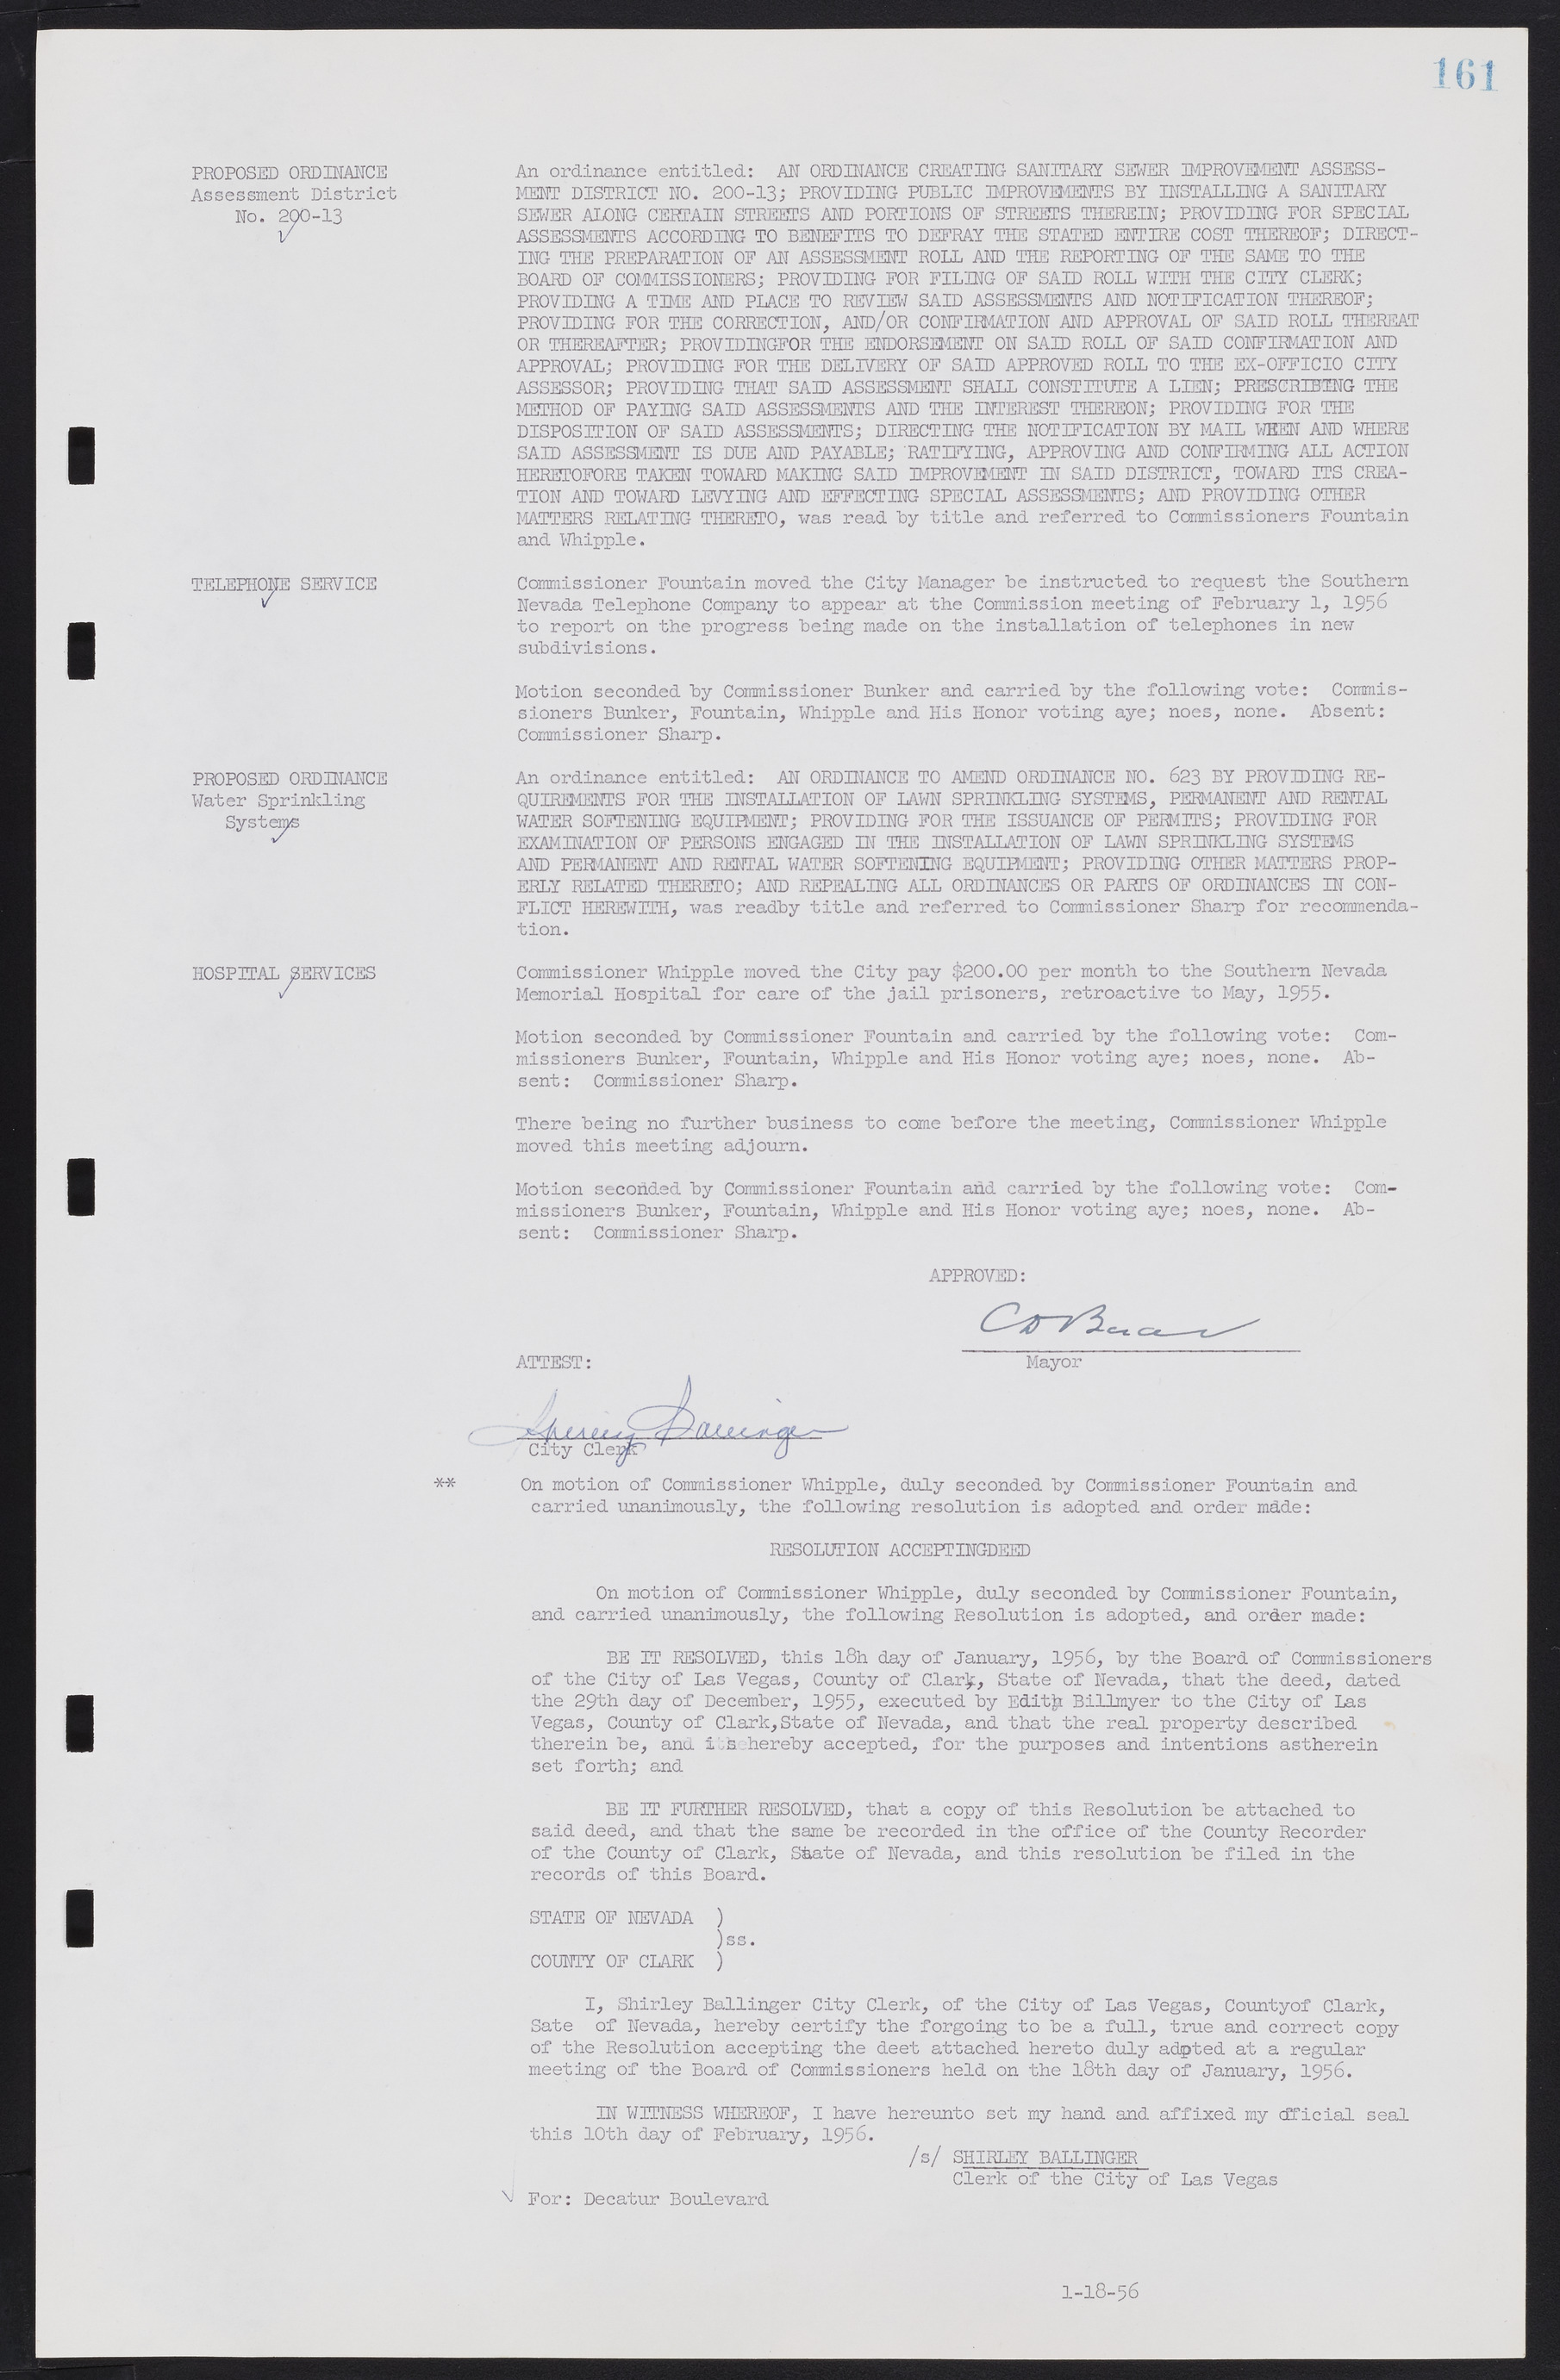 Las Vegas City Commission Minutes, September 21, 1955 to November 20, 1957, lvc000010-175